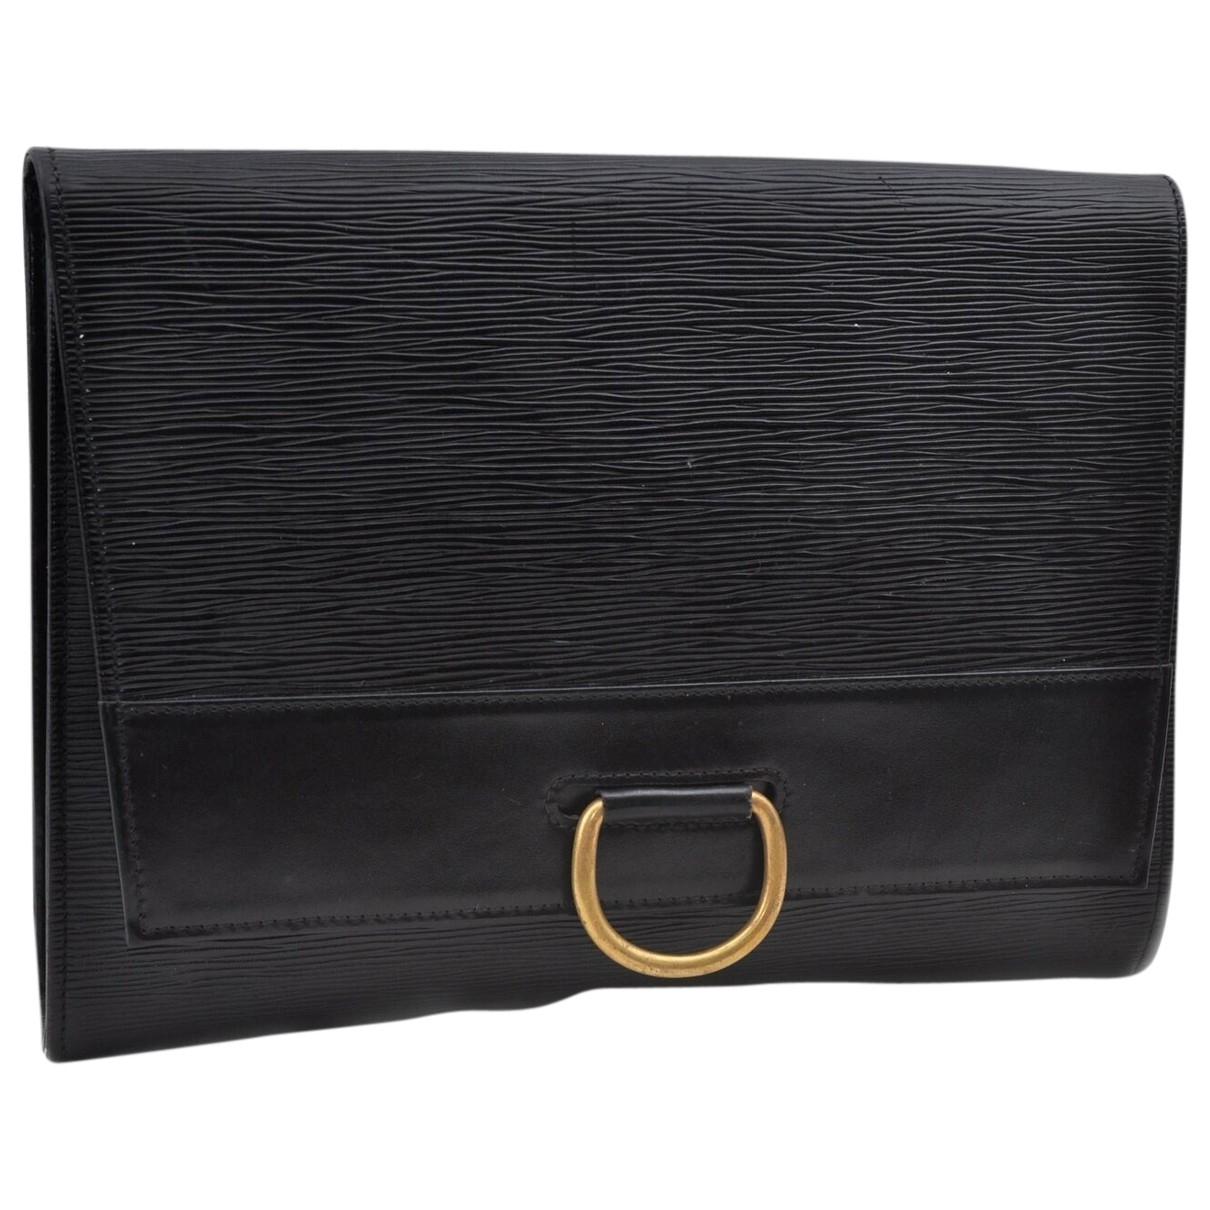 Louis Vuitton Vintage Black Leather Clutch Bag in Black - Save 8% - Lyst